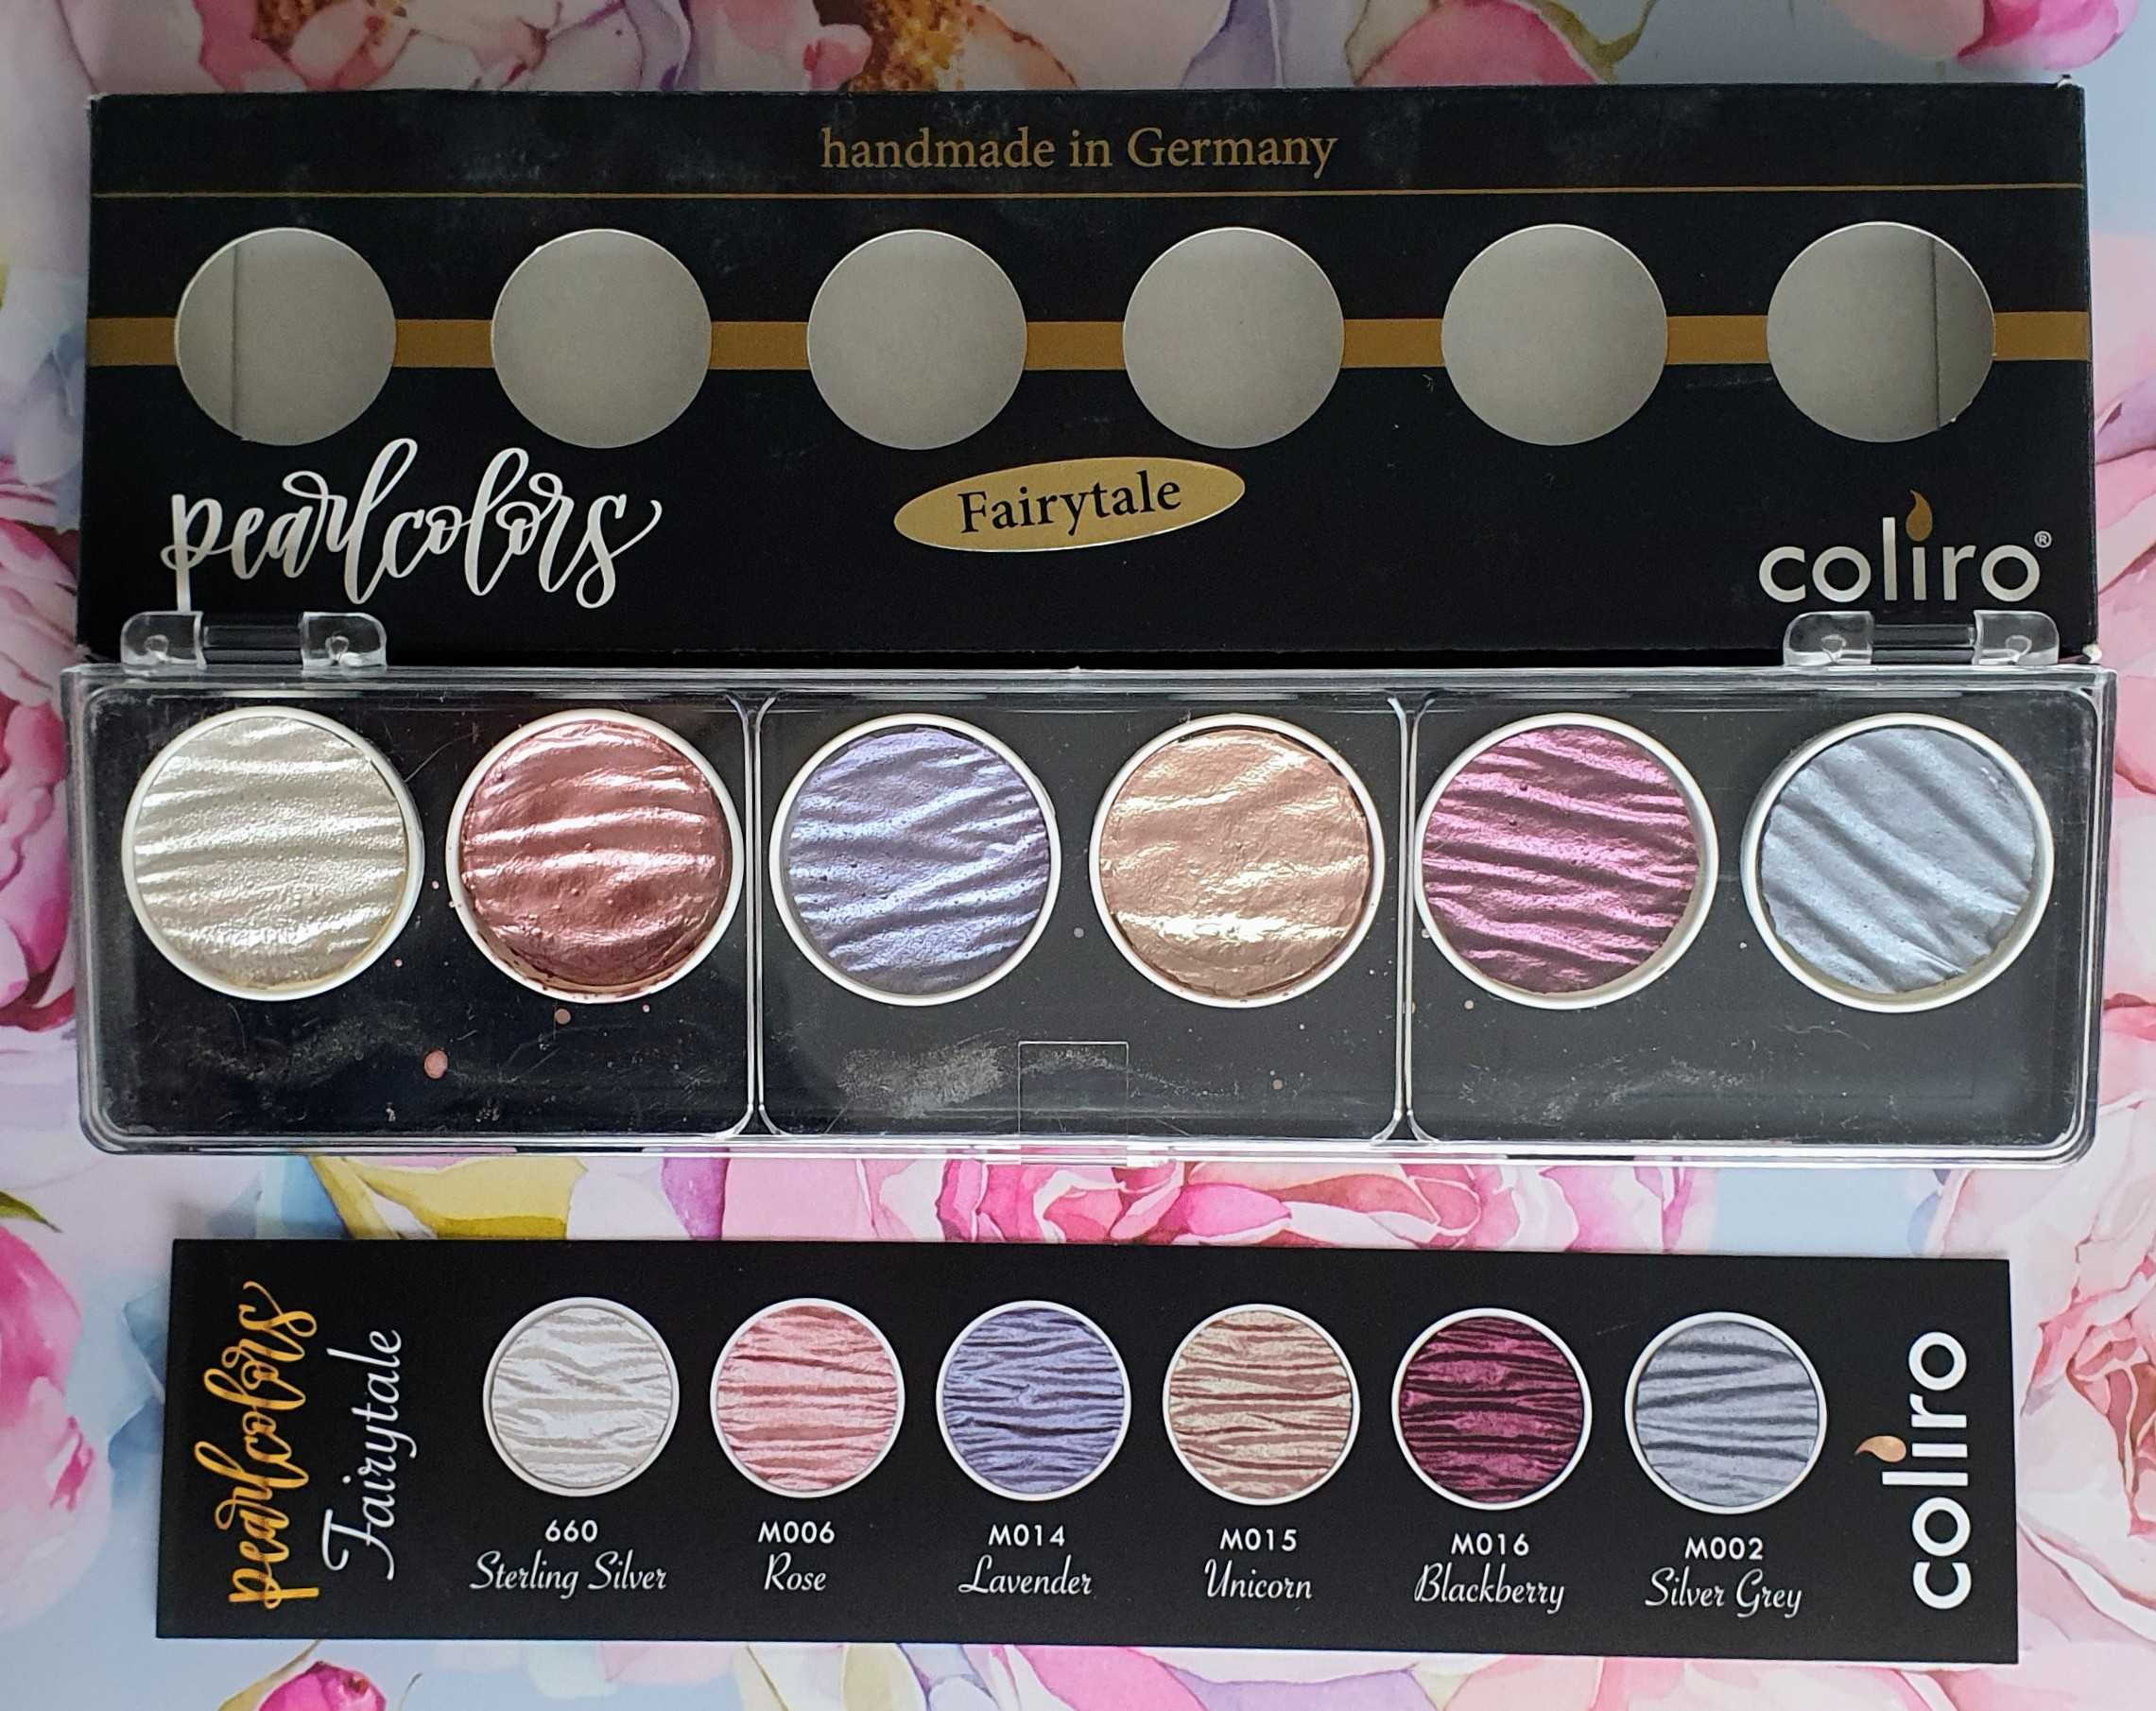 Coliro Pearlcolors Fairytale akwarele pigmenty holo metaliczne perłowe